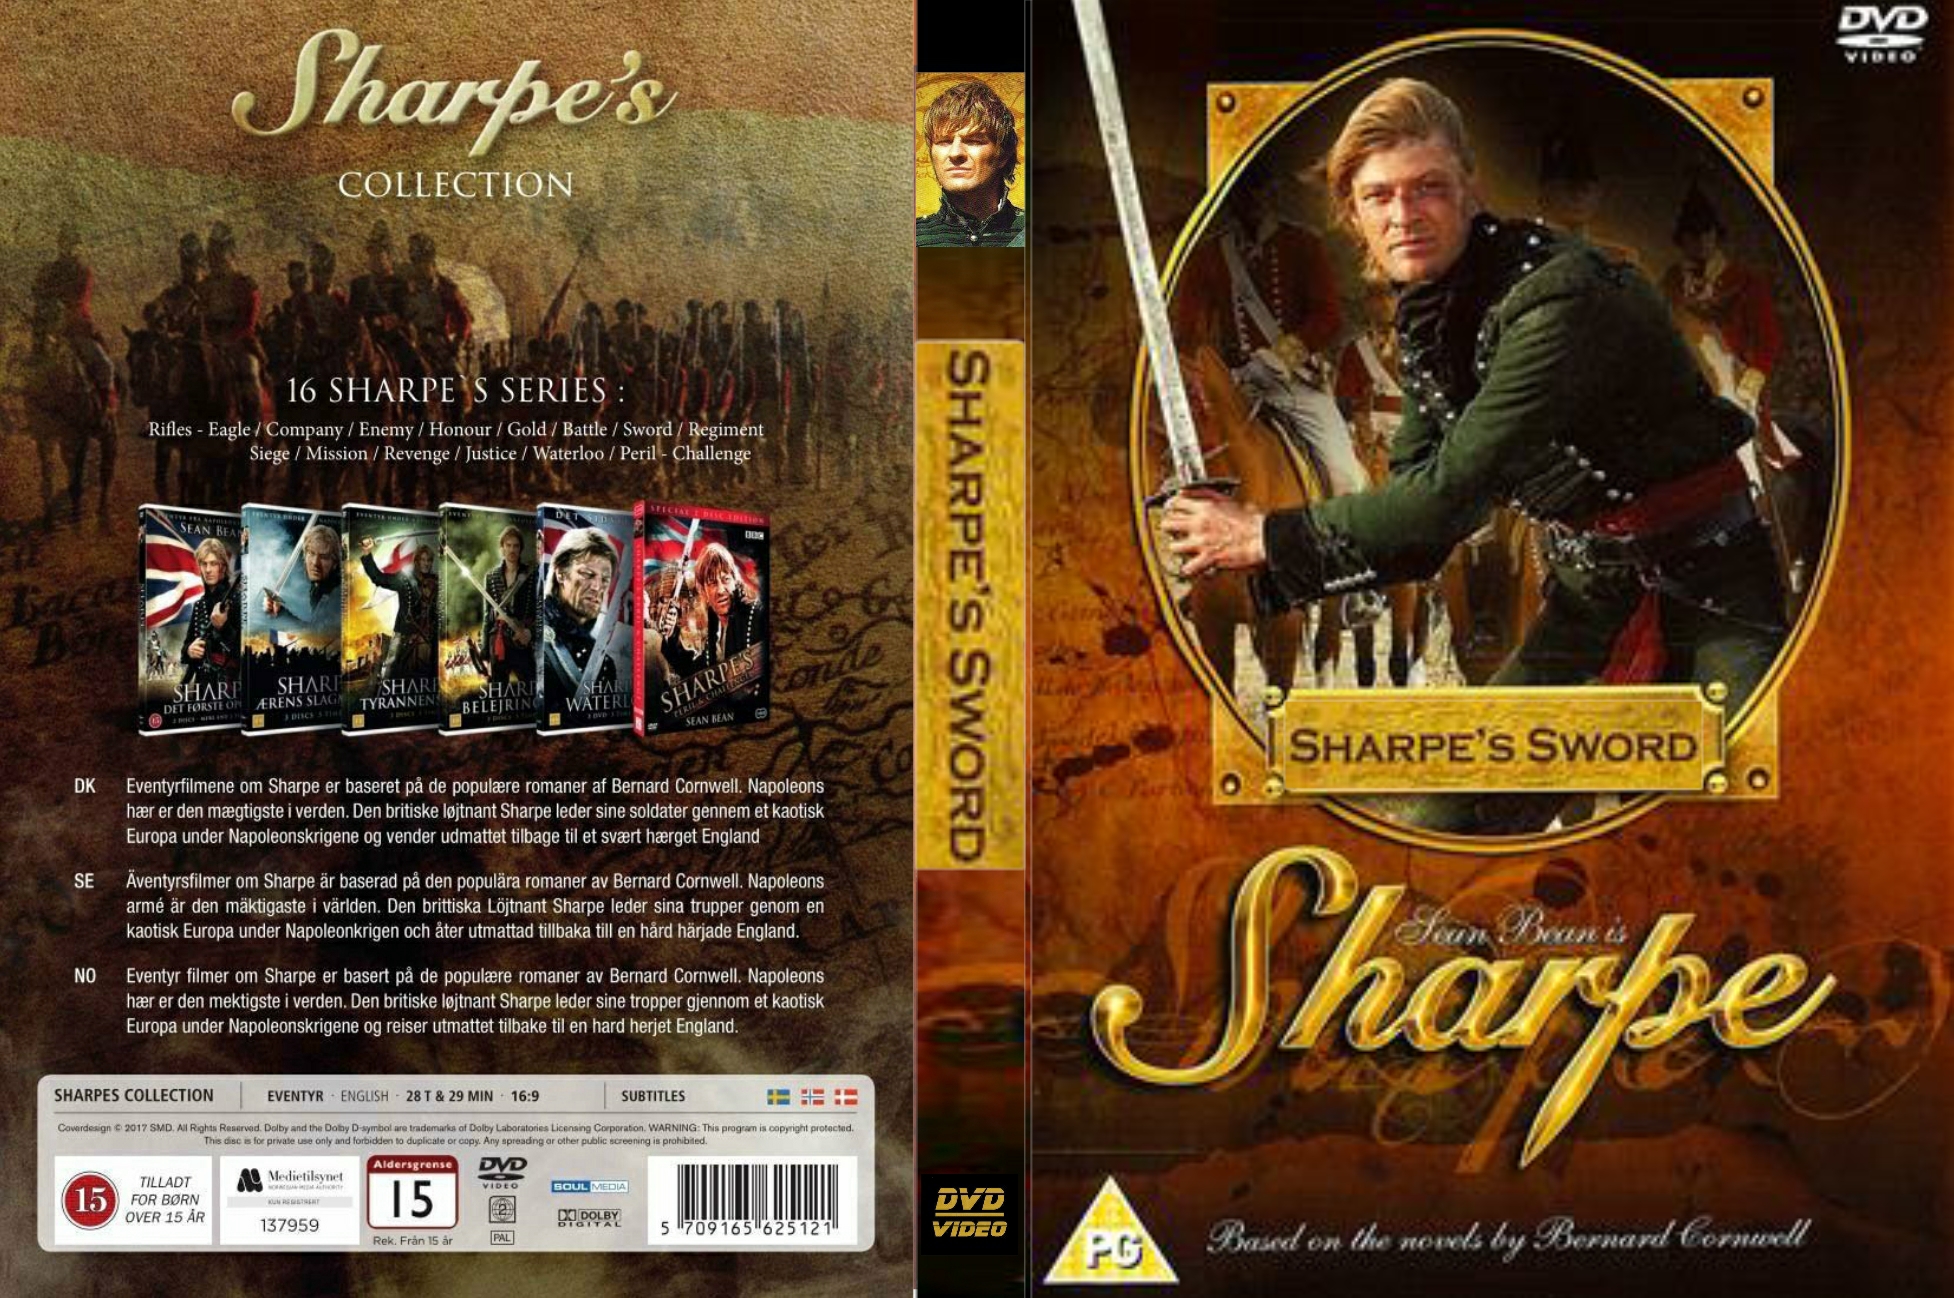 Sharpe's Sword - DvD 8